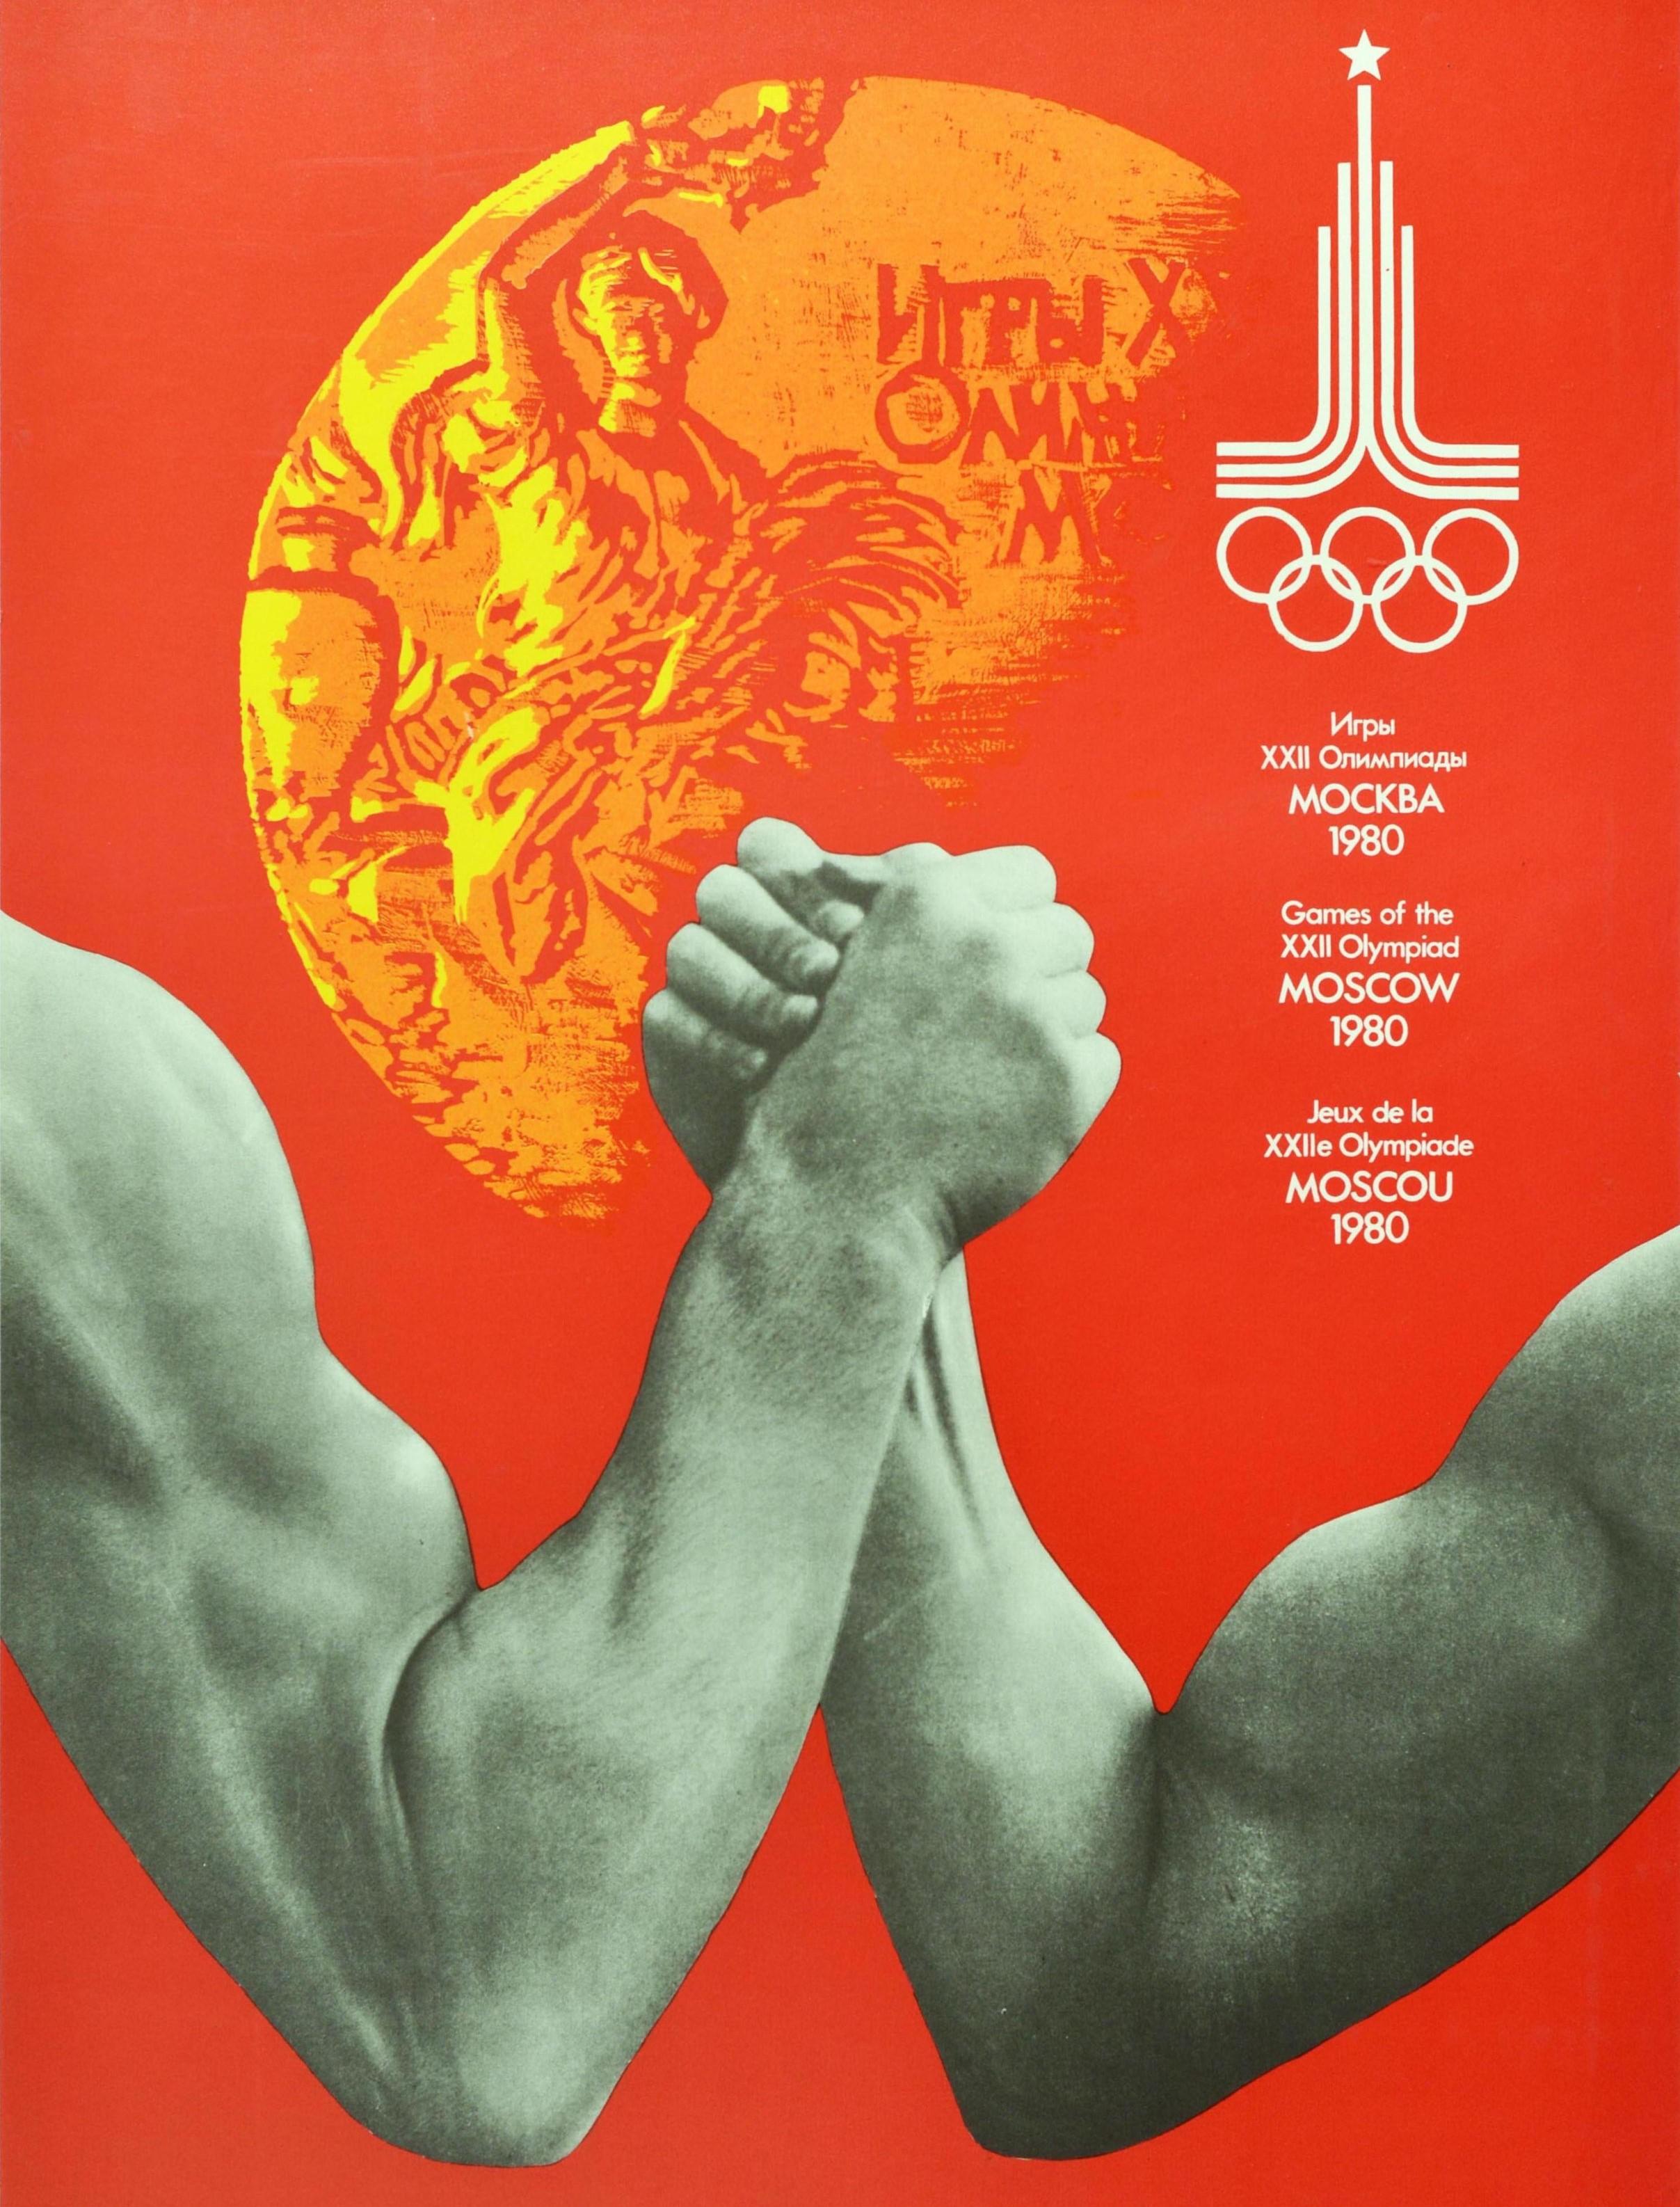 arm wrestling in olympics